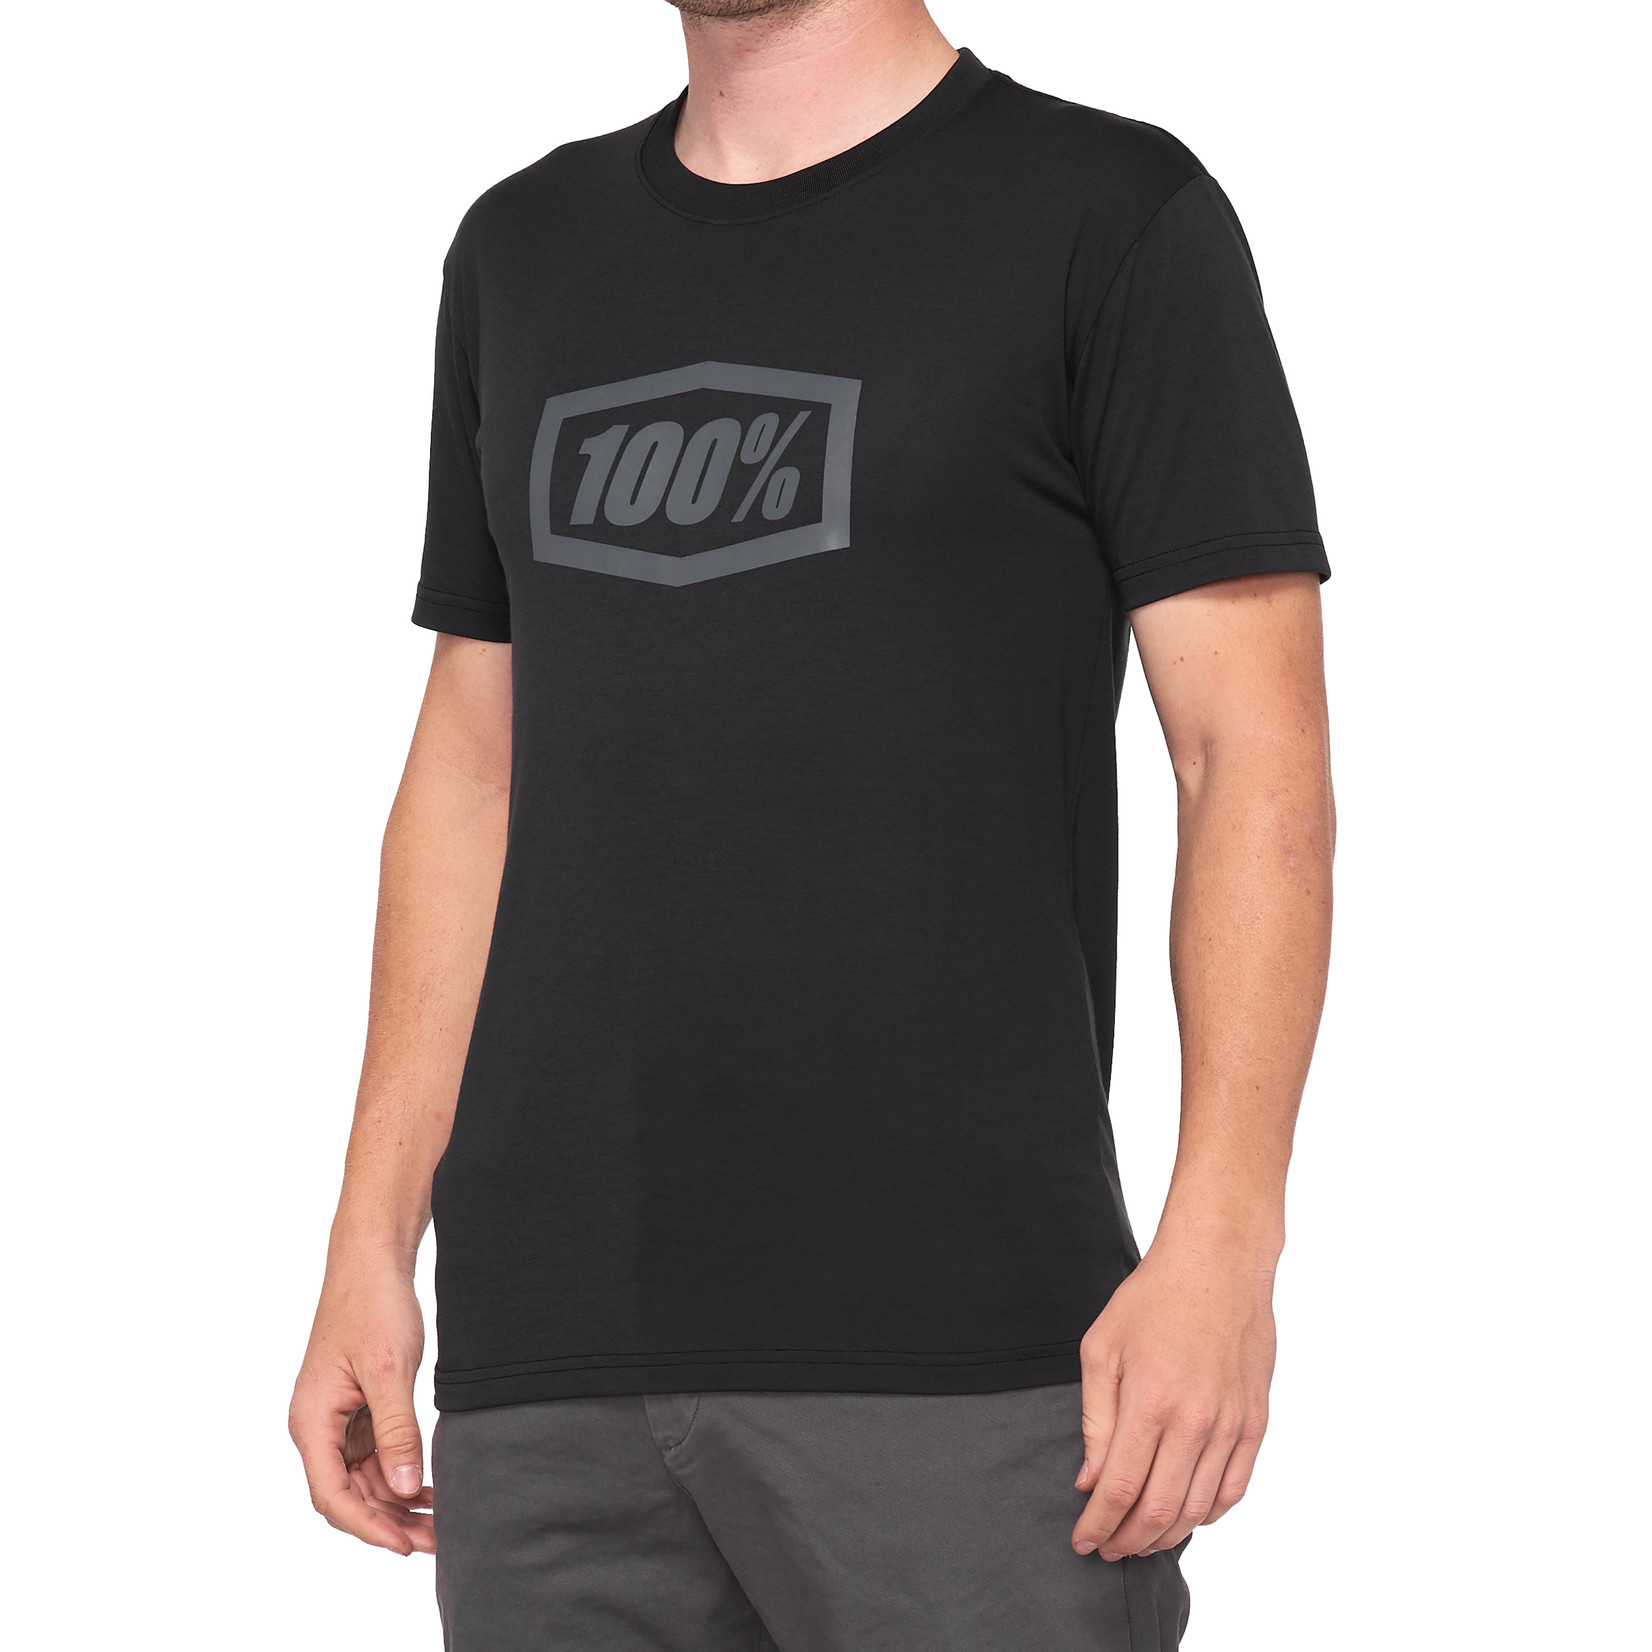 FE sports 100% Essential Tech Tee Shirt - Black/Grey 85% Polyester/15% Cotton Dri-release